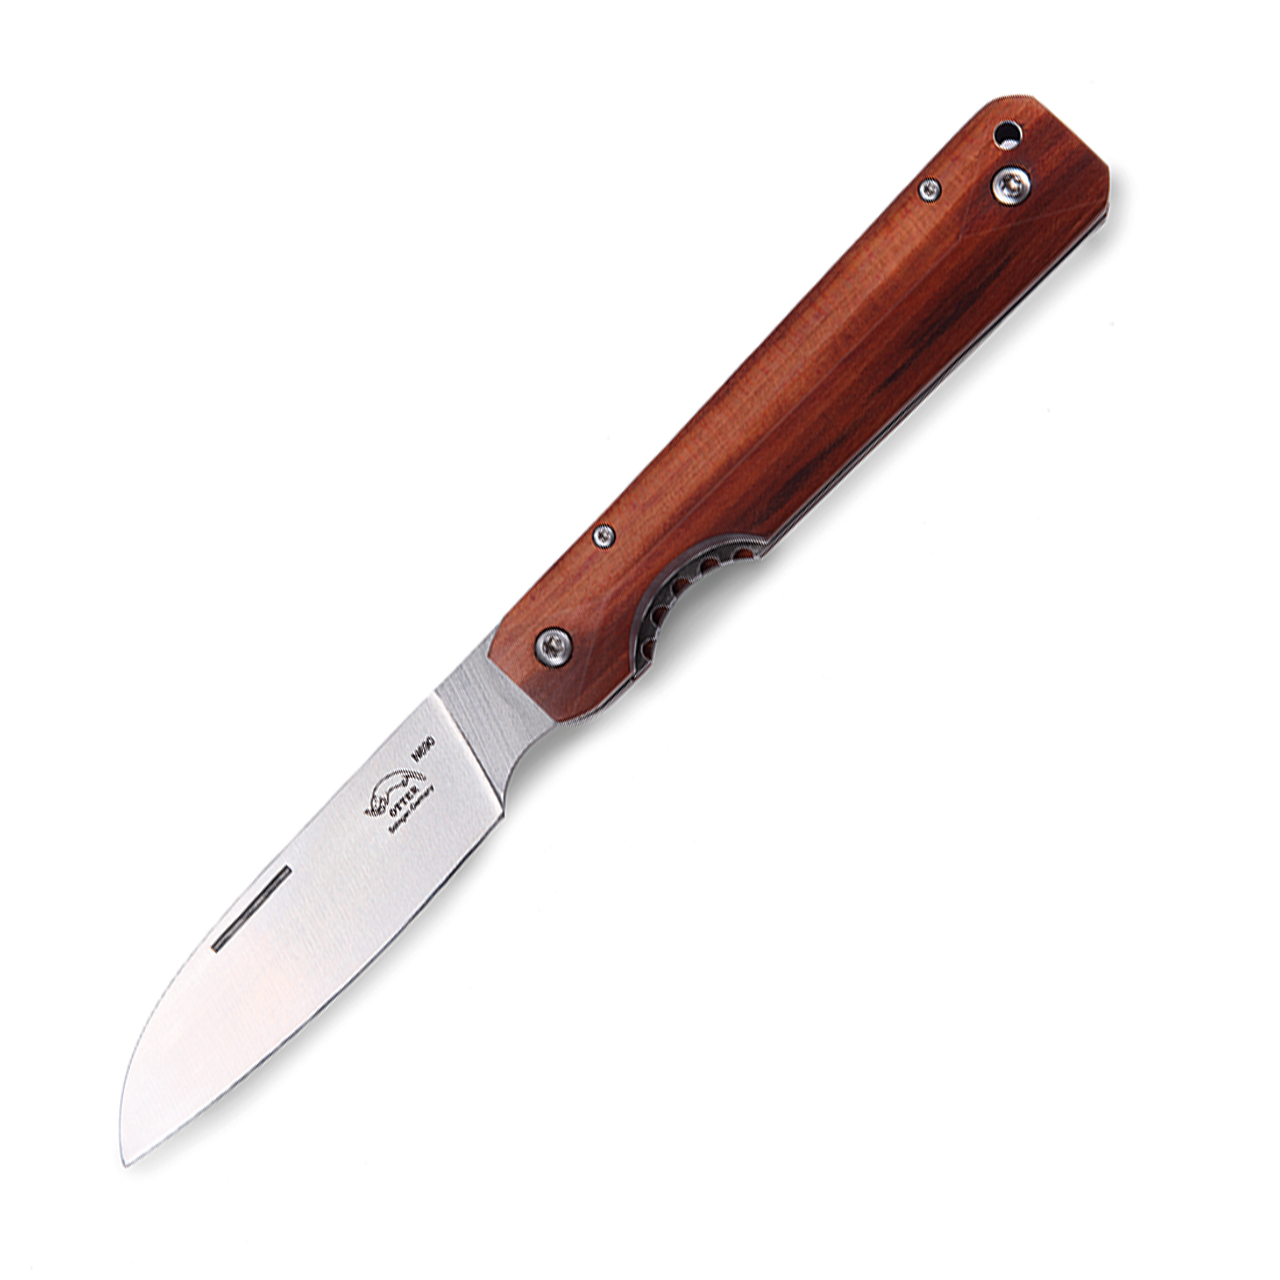 2 Pocket Knife Bag | Gaston | Compact | Dalstrong